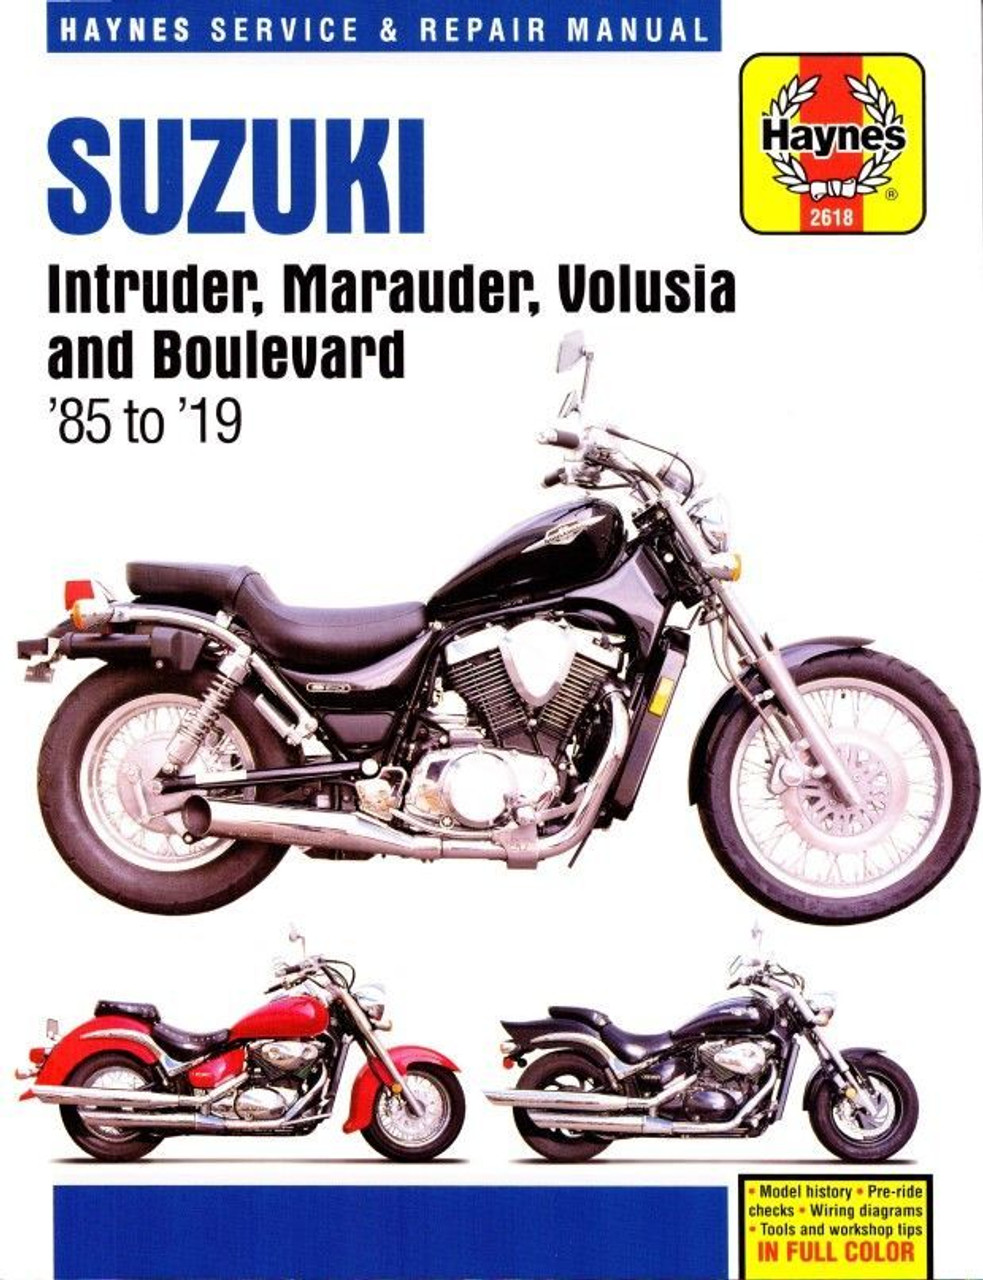 1996 Suzuki Intruder VS1400 Introduction! 